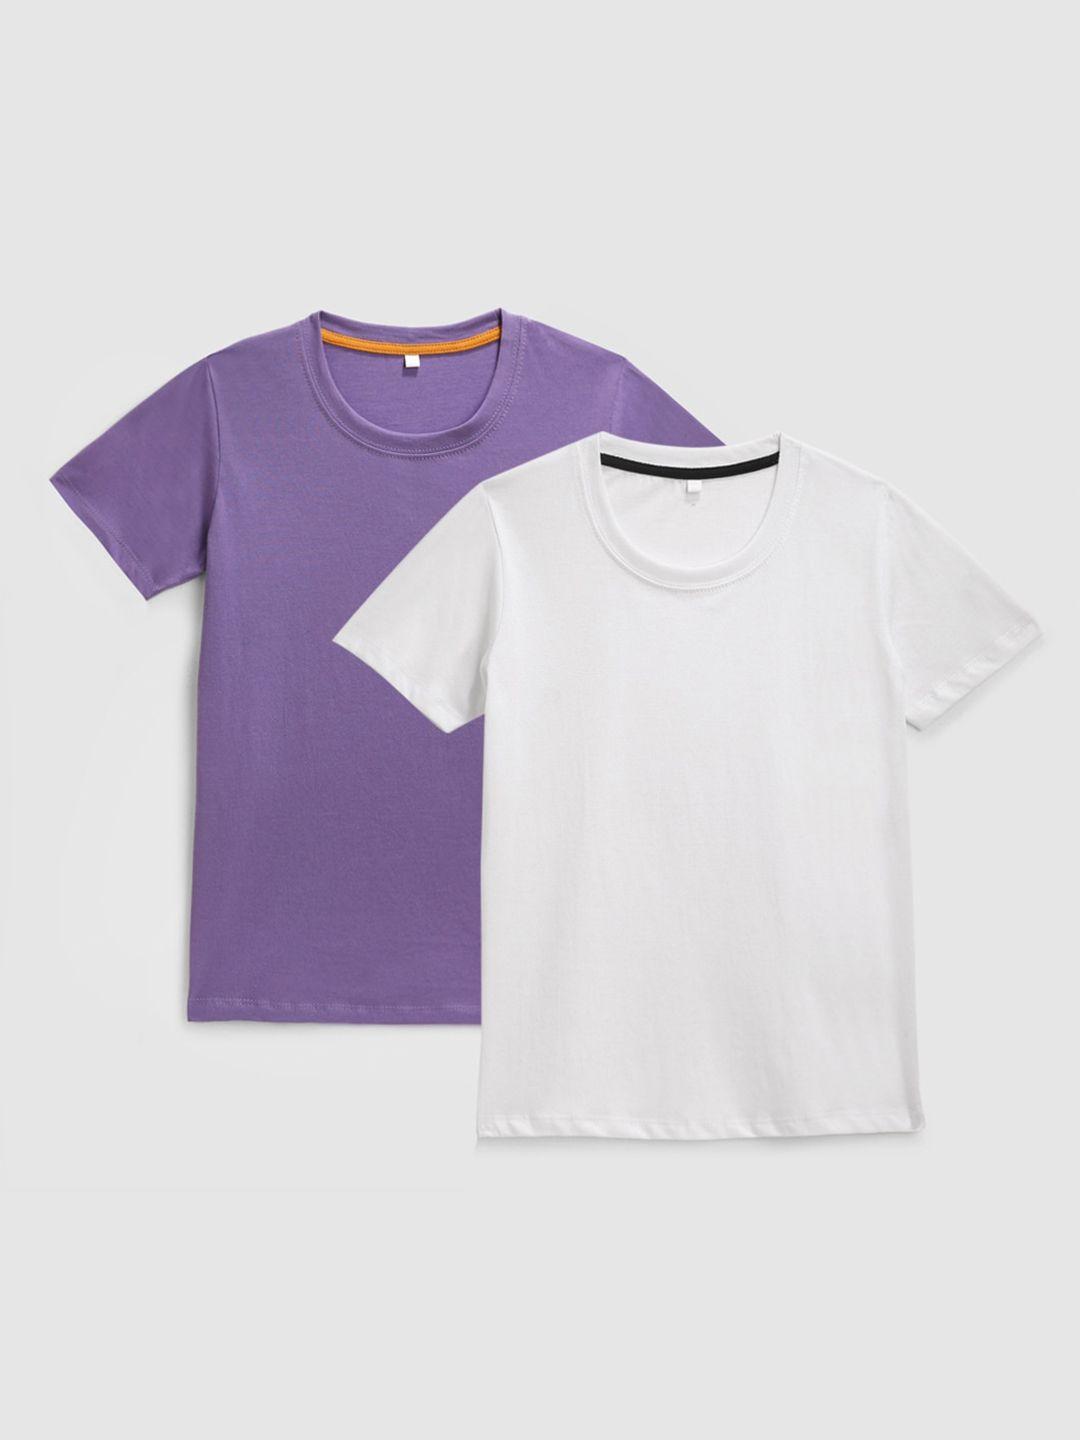 kidscraft boys white & purple pack of 2 t-shirt